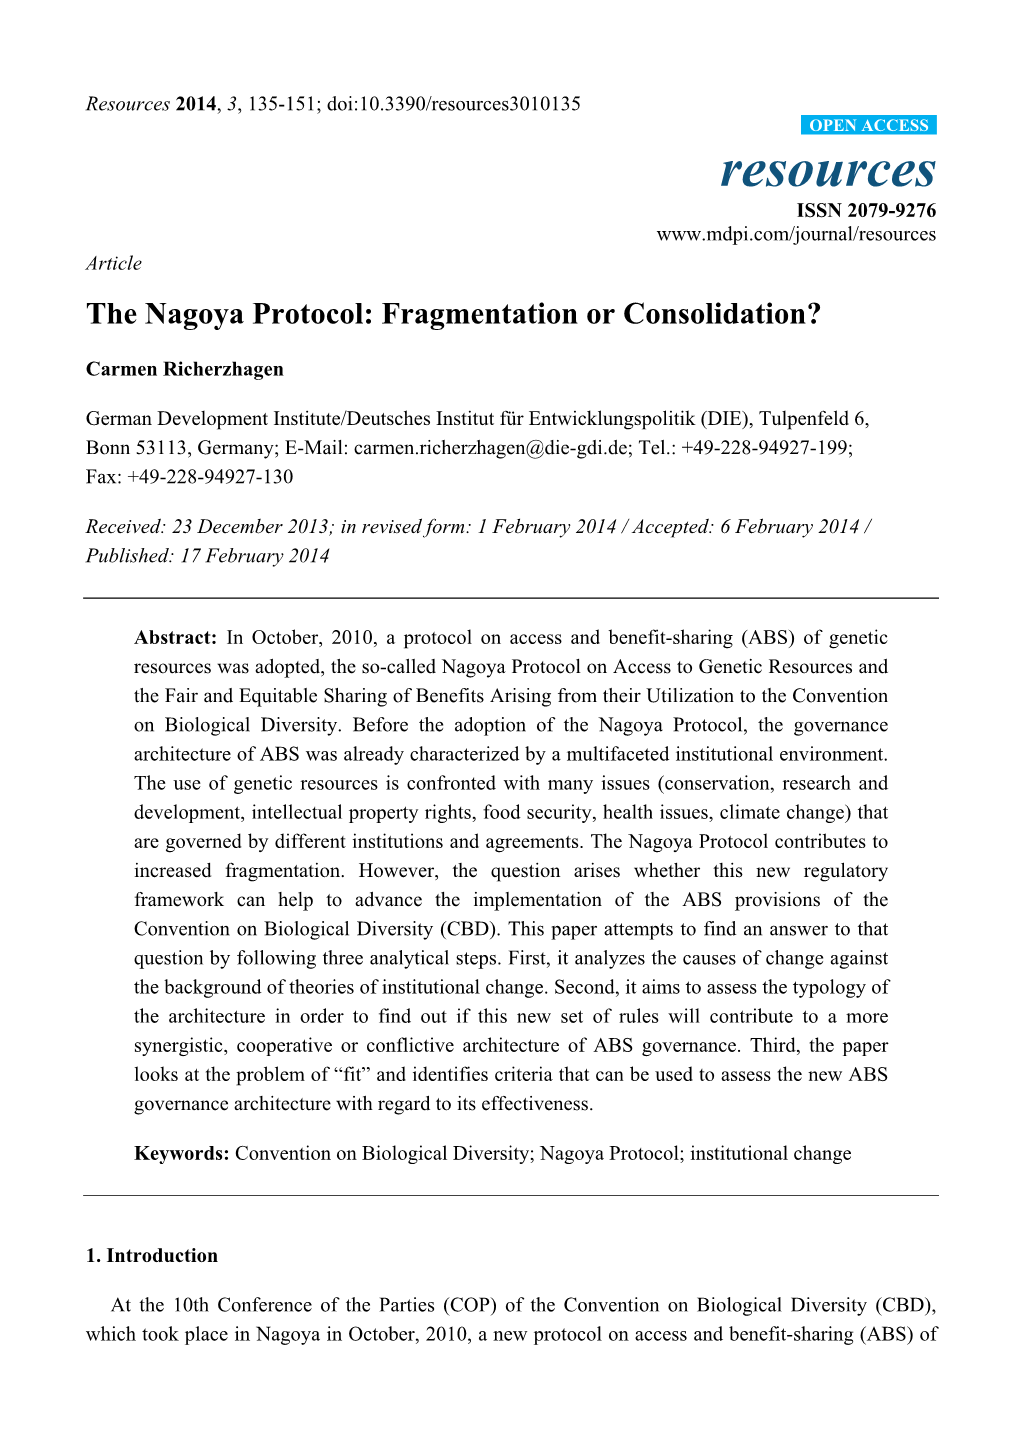 The Nagoya Protocol: Fragmentation Or Consolidation?